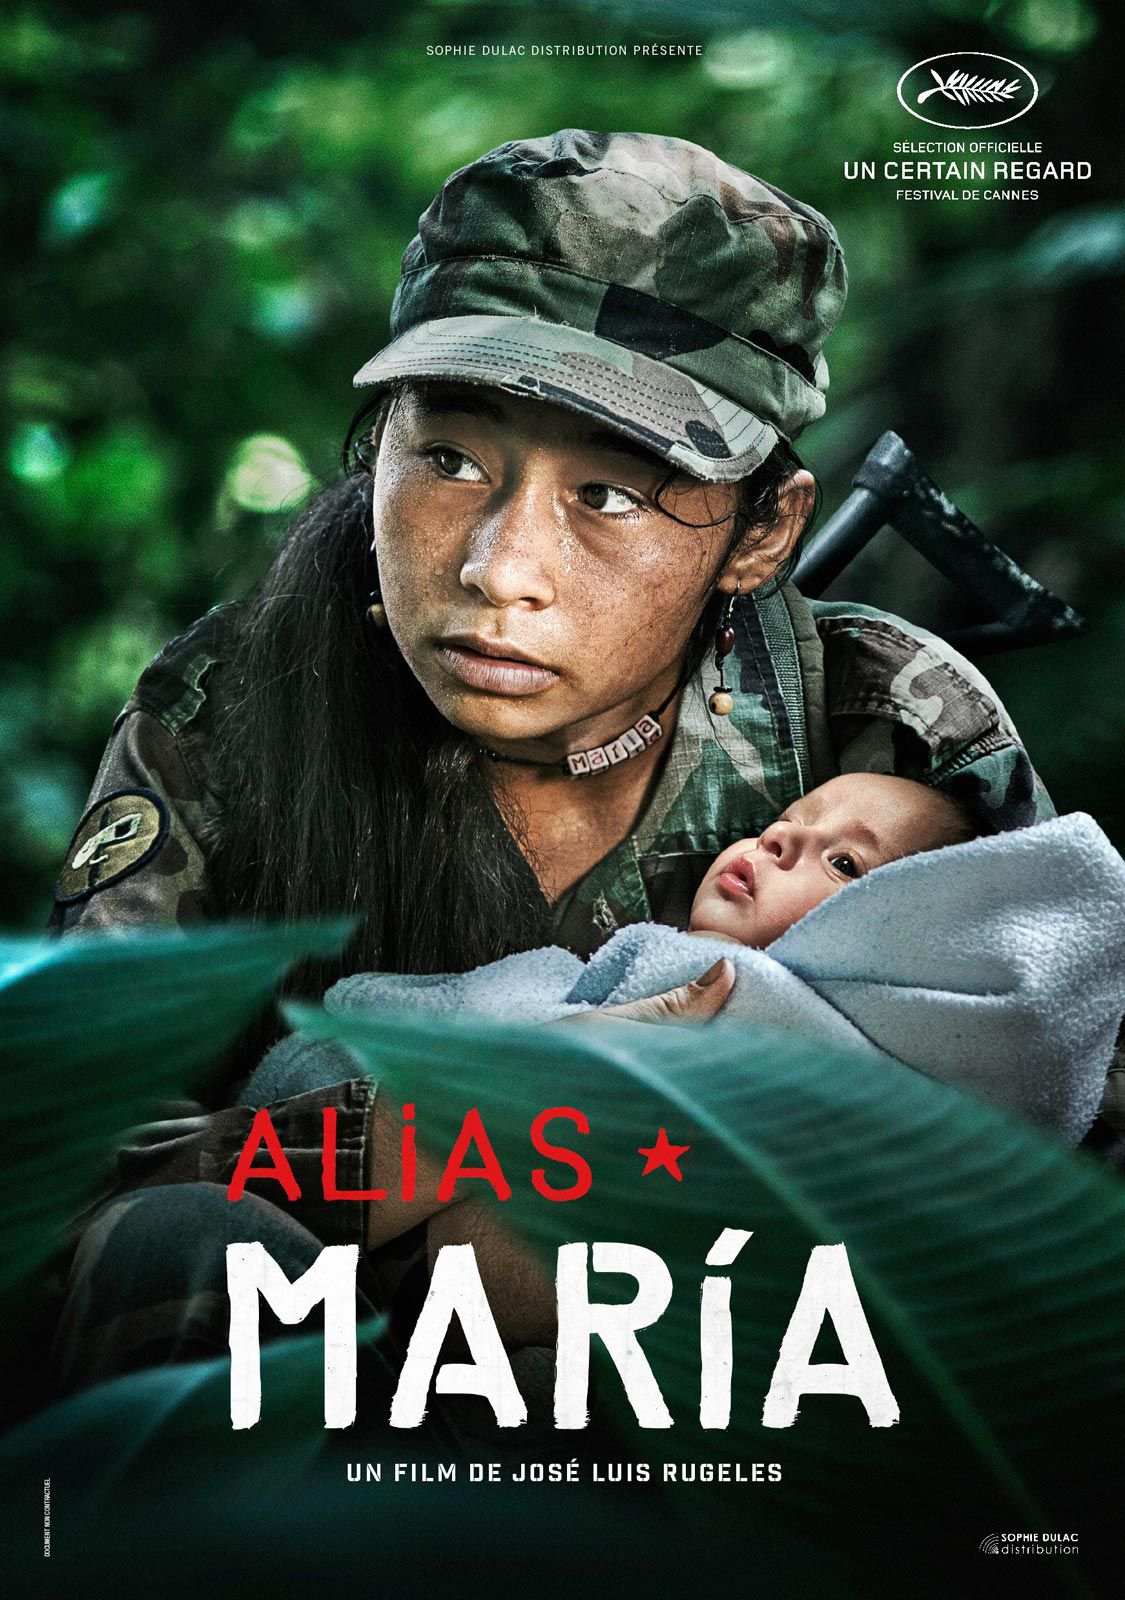 Alias Maria - Film (2015) streaming VF gratuit complet